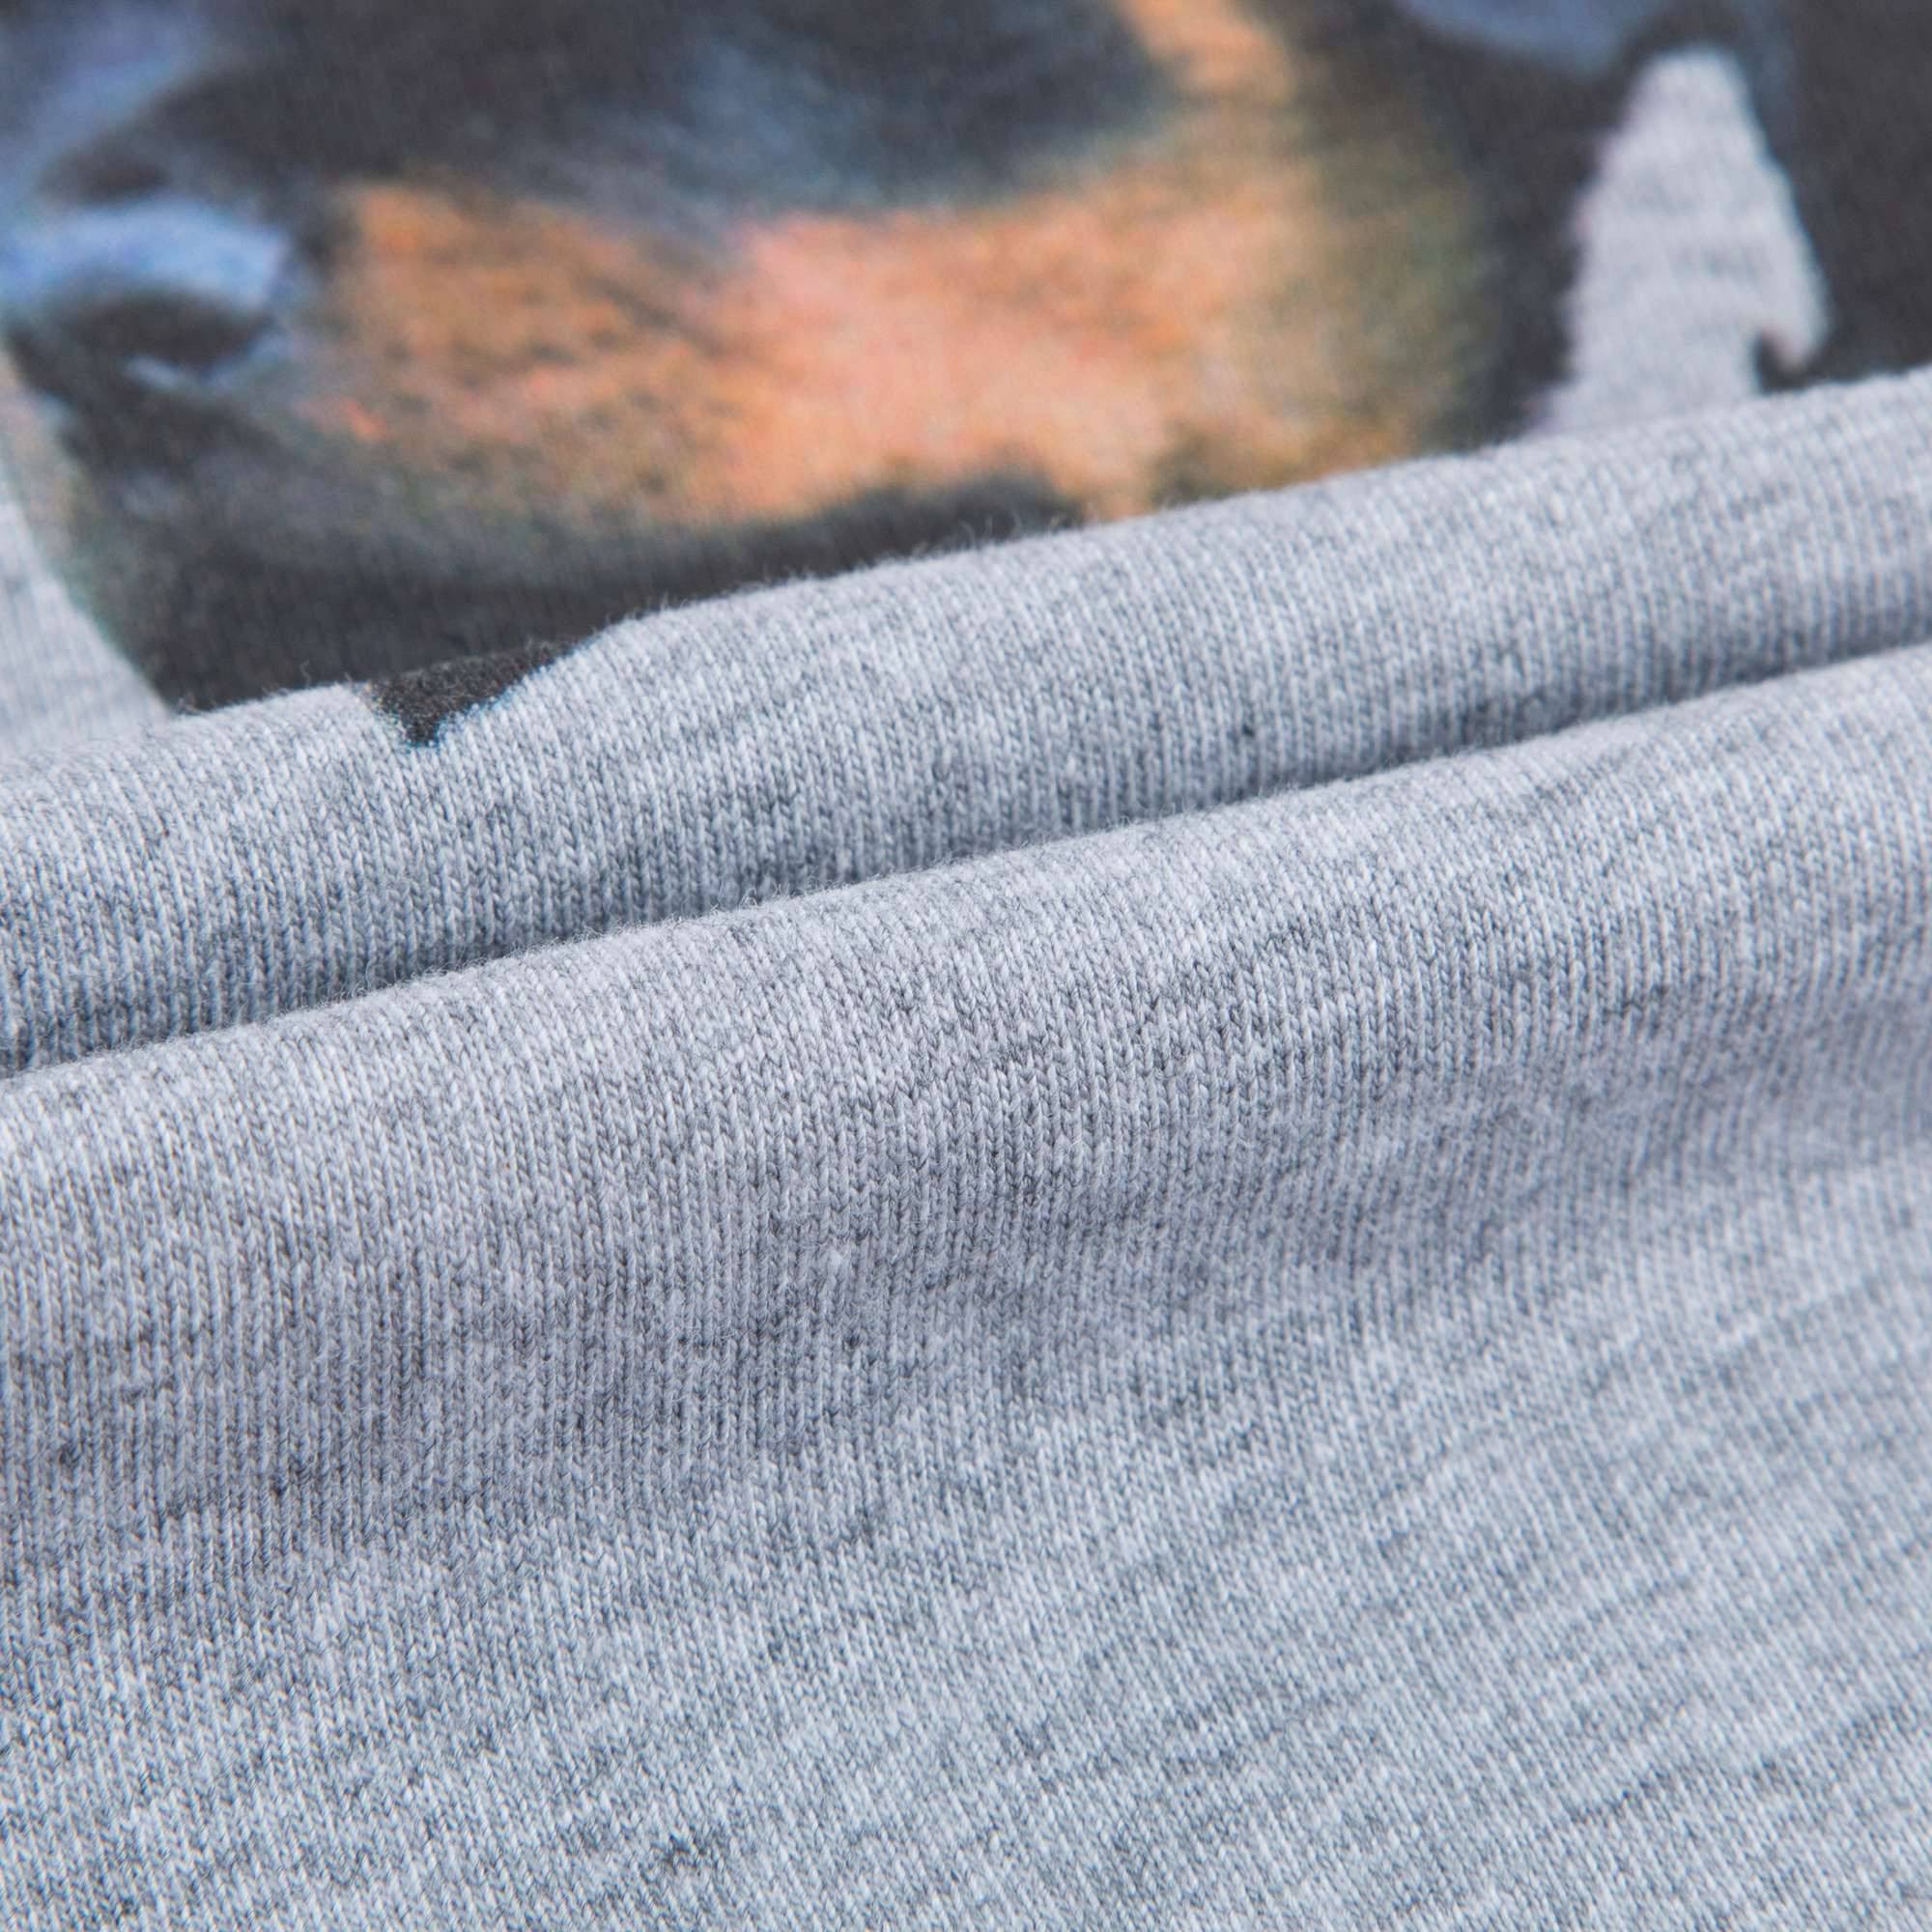 Baby Boys Grey Dogs Printed T-Shirt